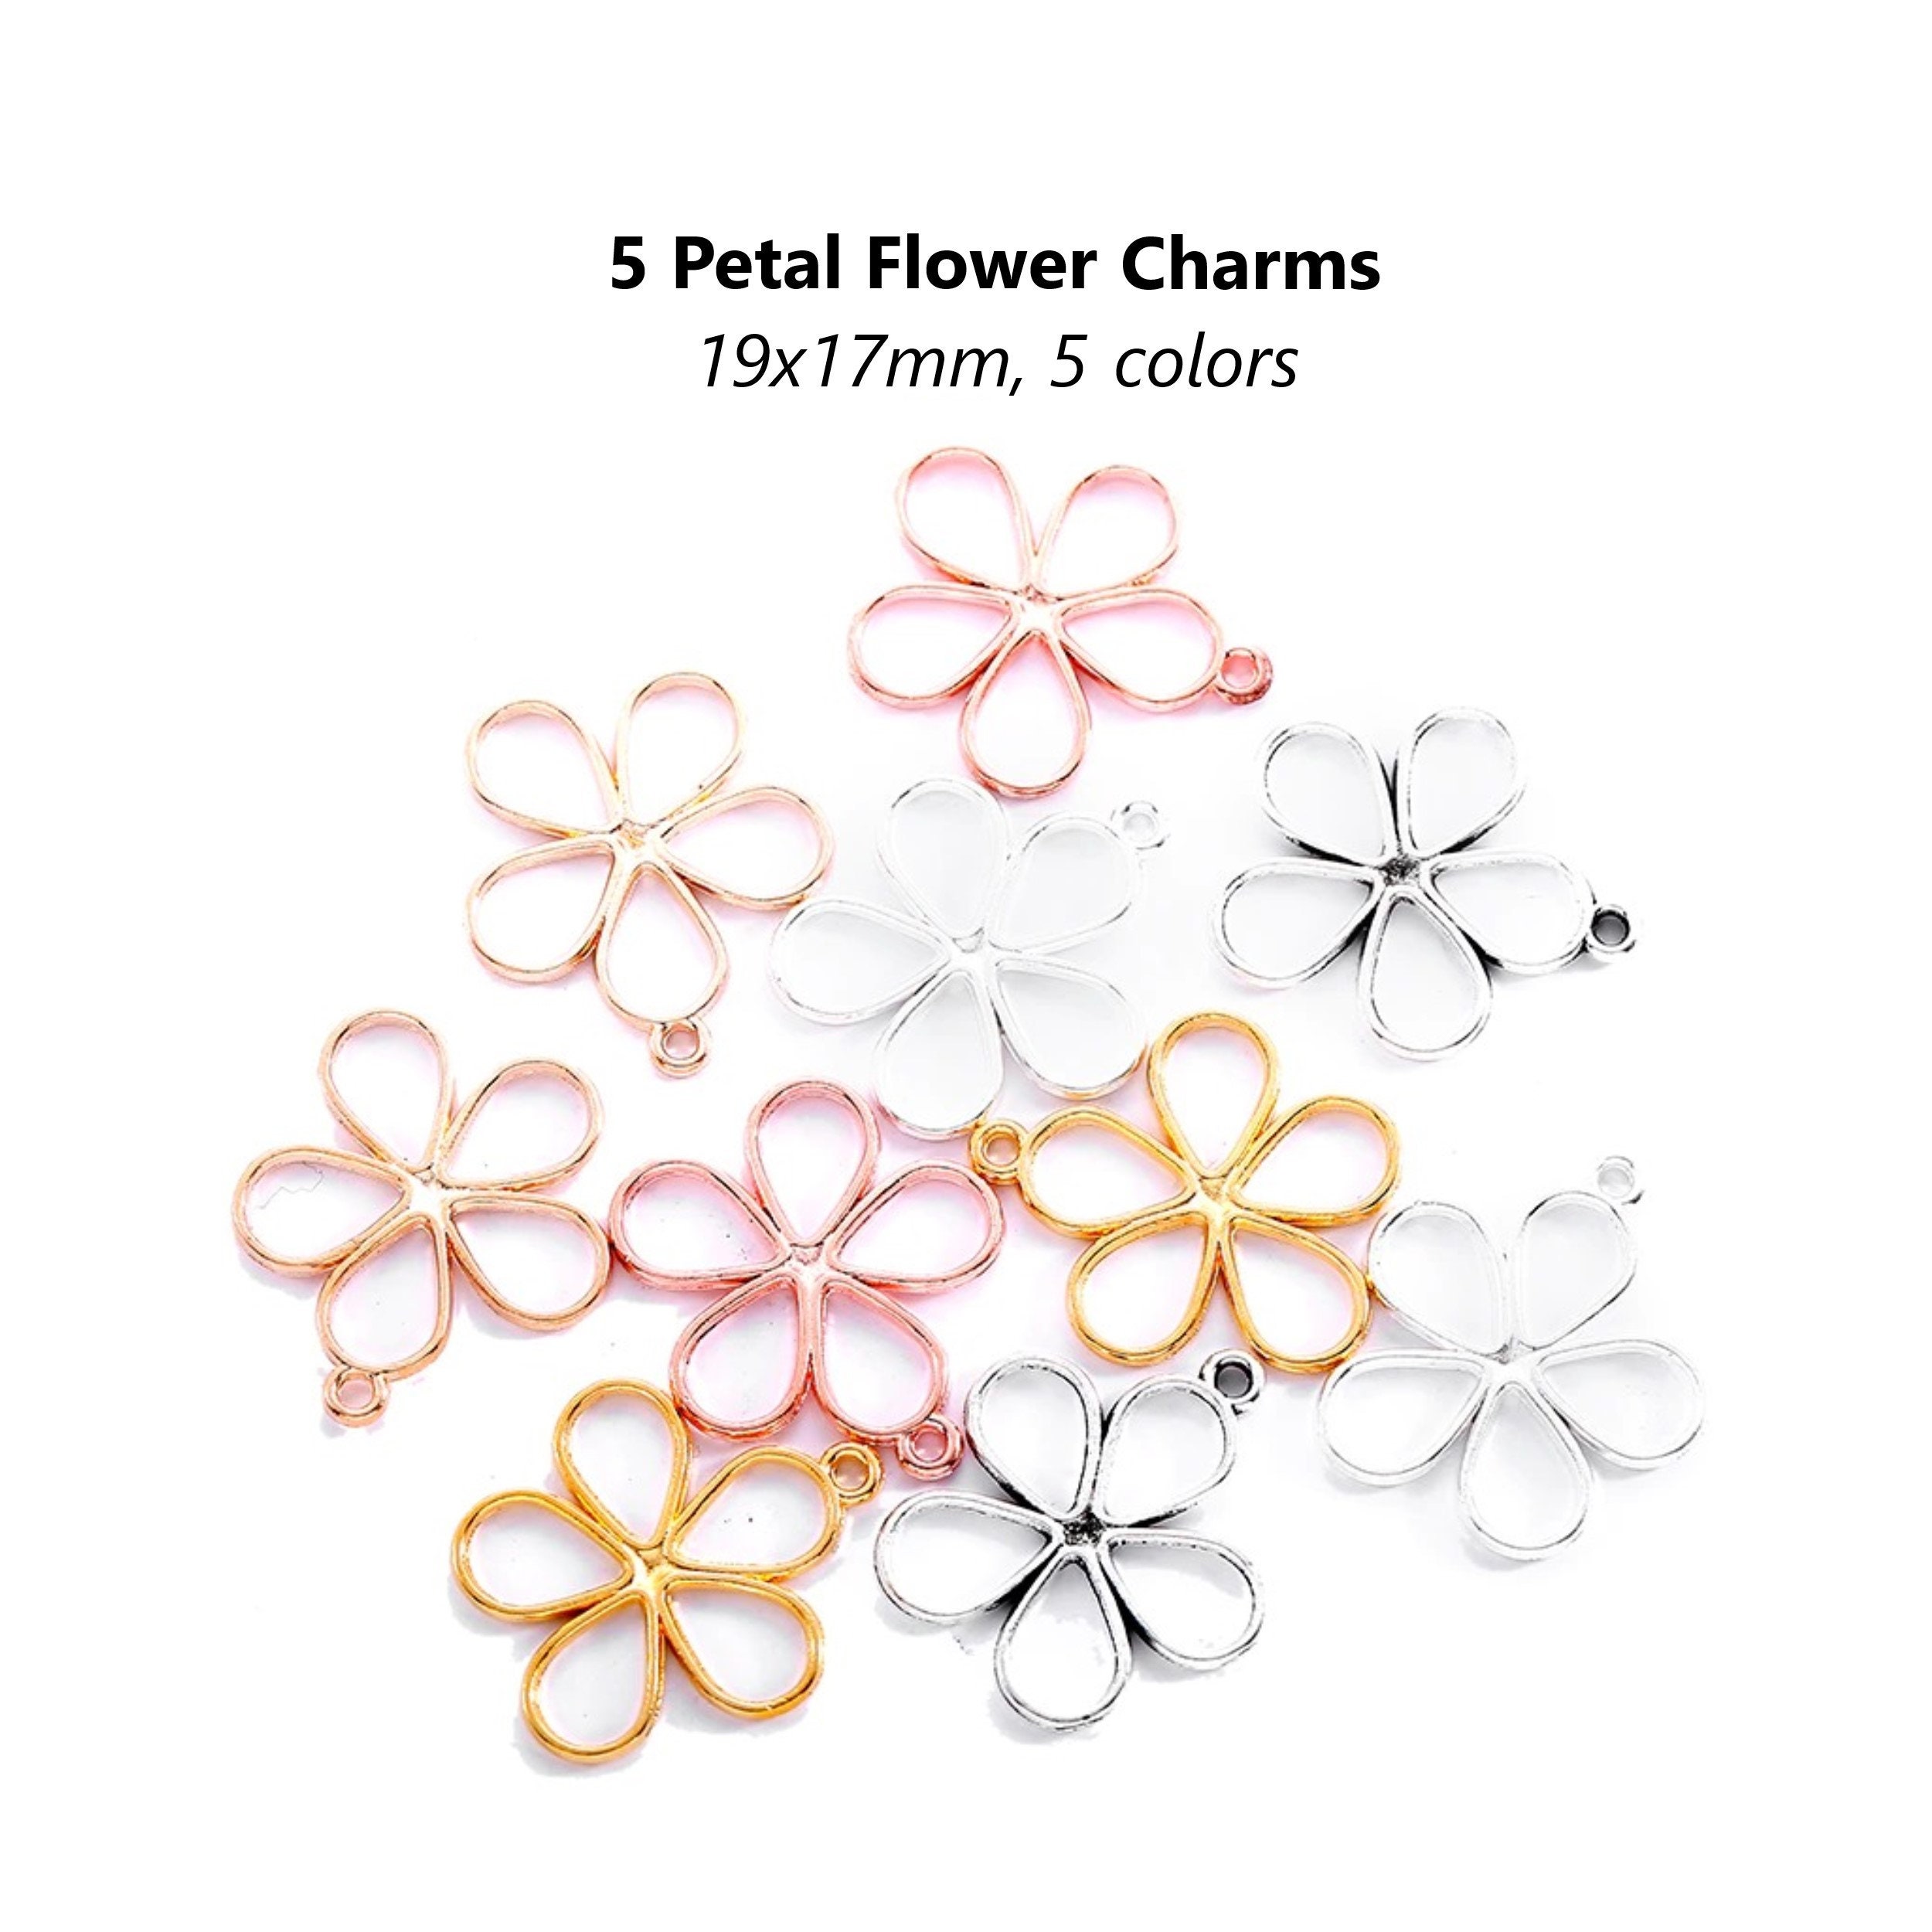 Petal Flower Charms (5)